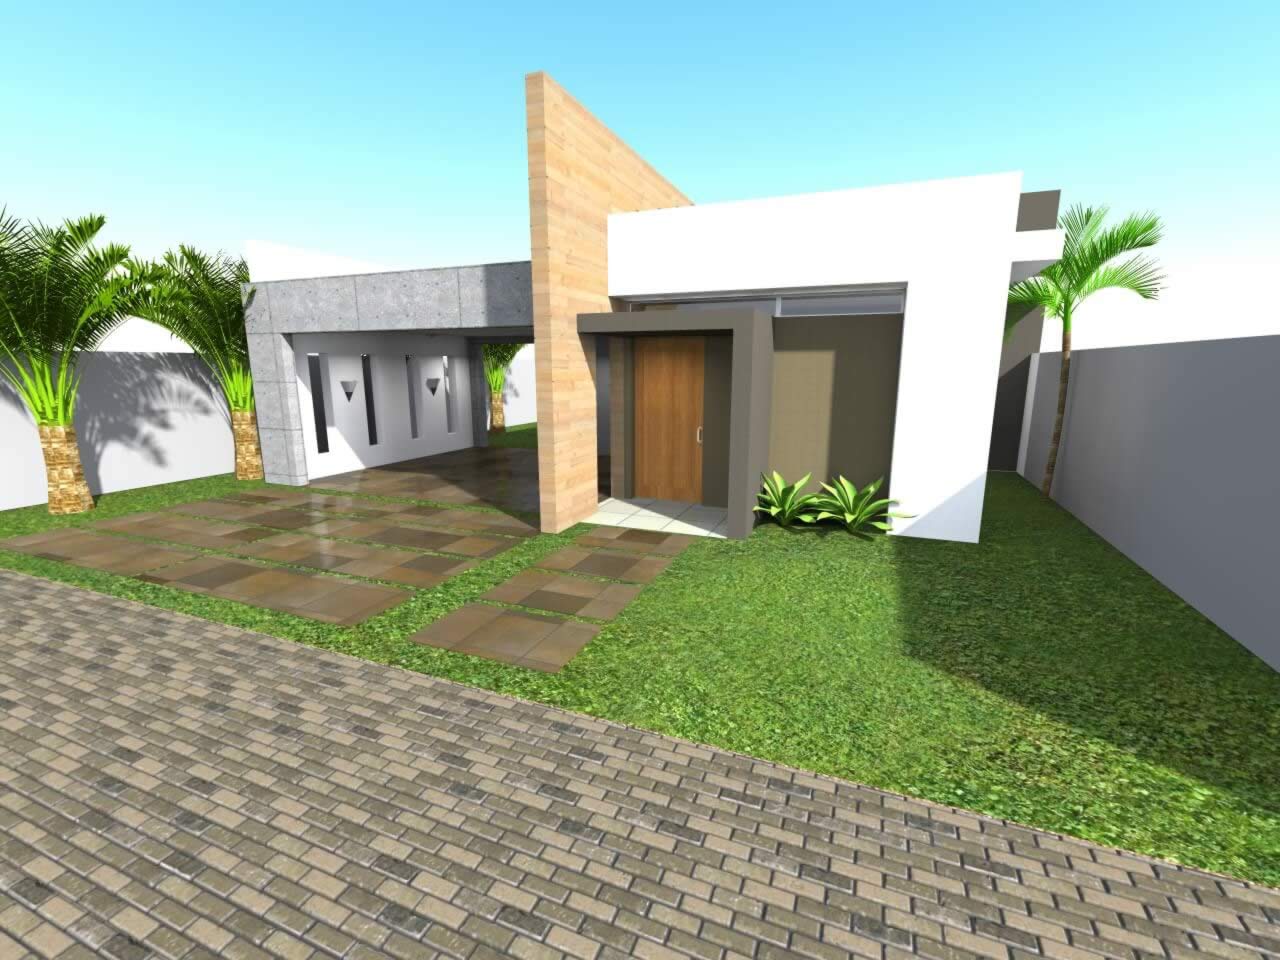 Apucarana-PR - Casa do Construtor